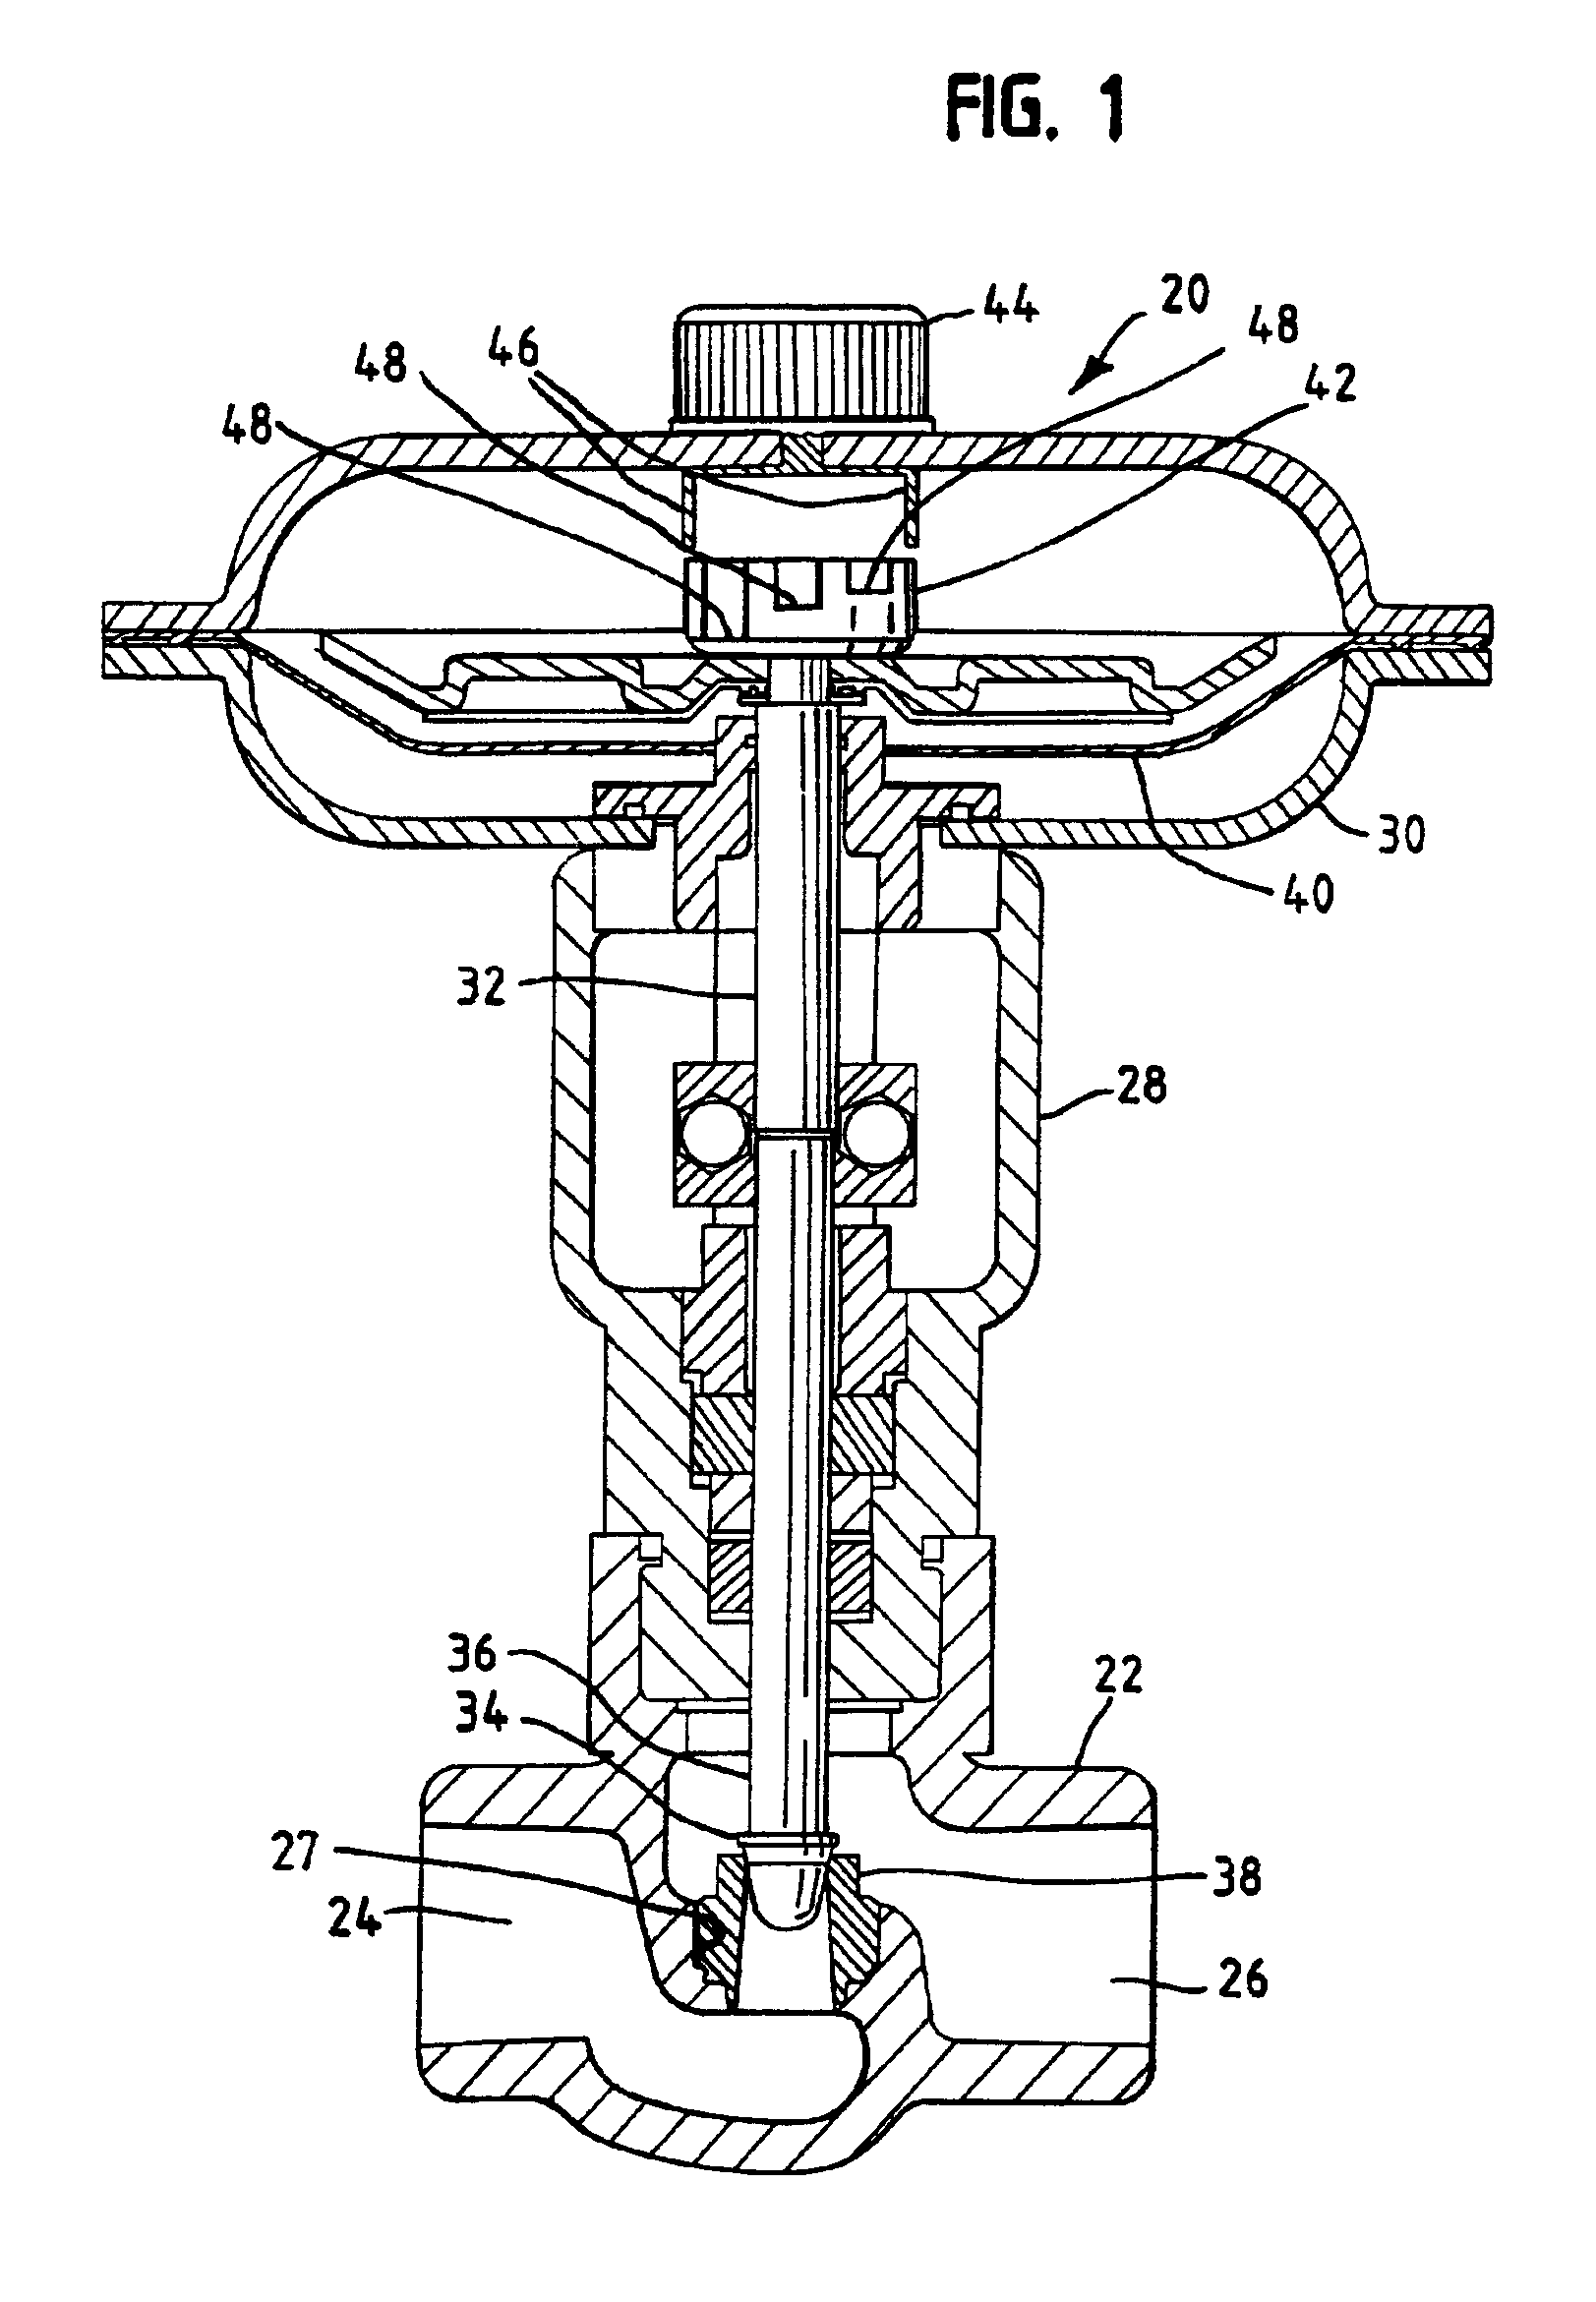 Control valve flow adjustment device